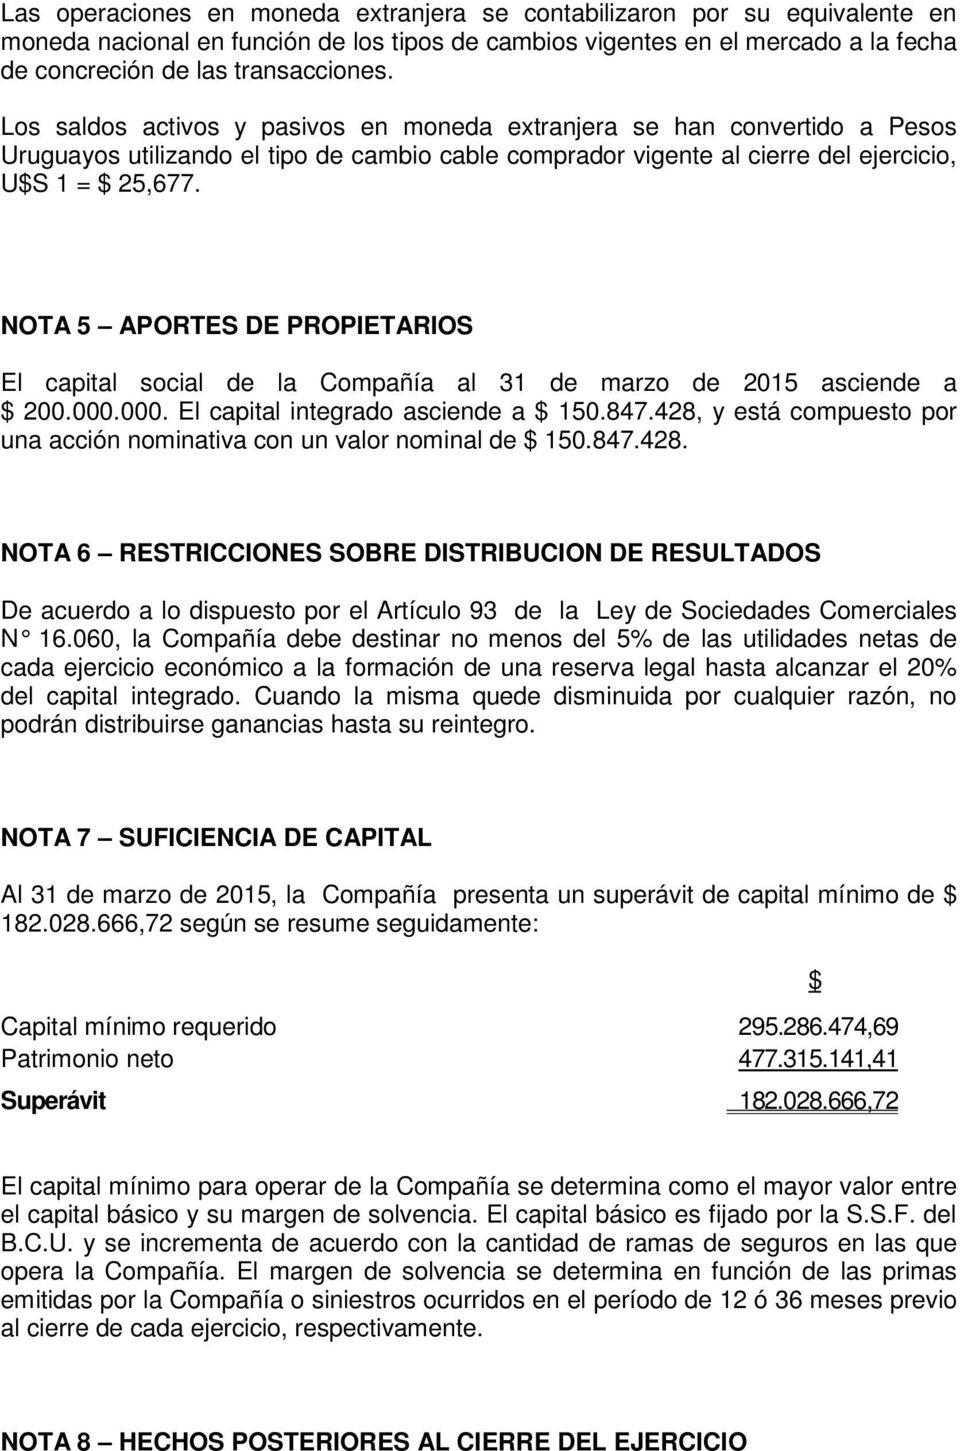 NOTA 5 APORTES DE PROPIETARIOS El capital social de la Compañía al 31 de marzo de 2015 asciende a $ 200.000.000. El capital integrado asciende a $ 150.847.